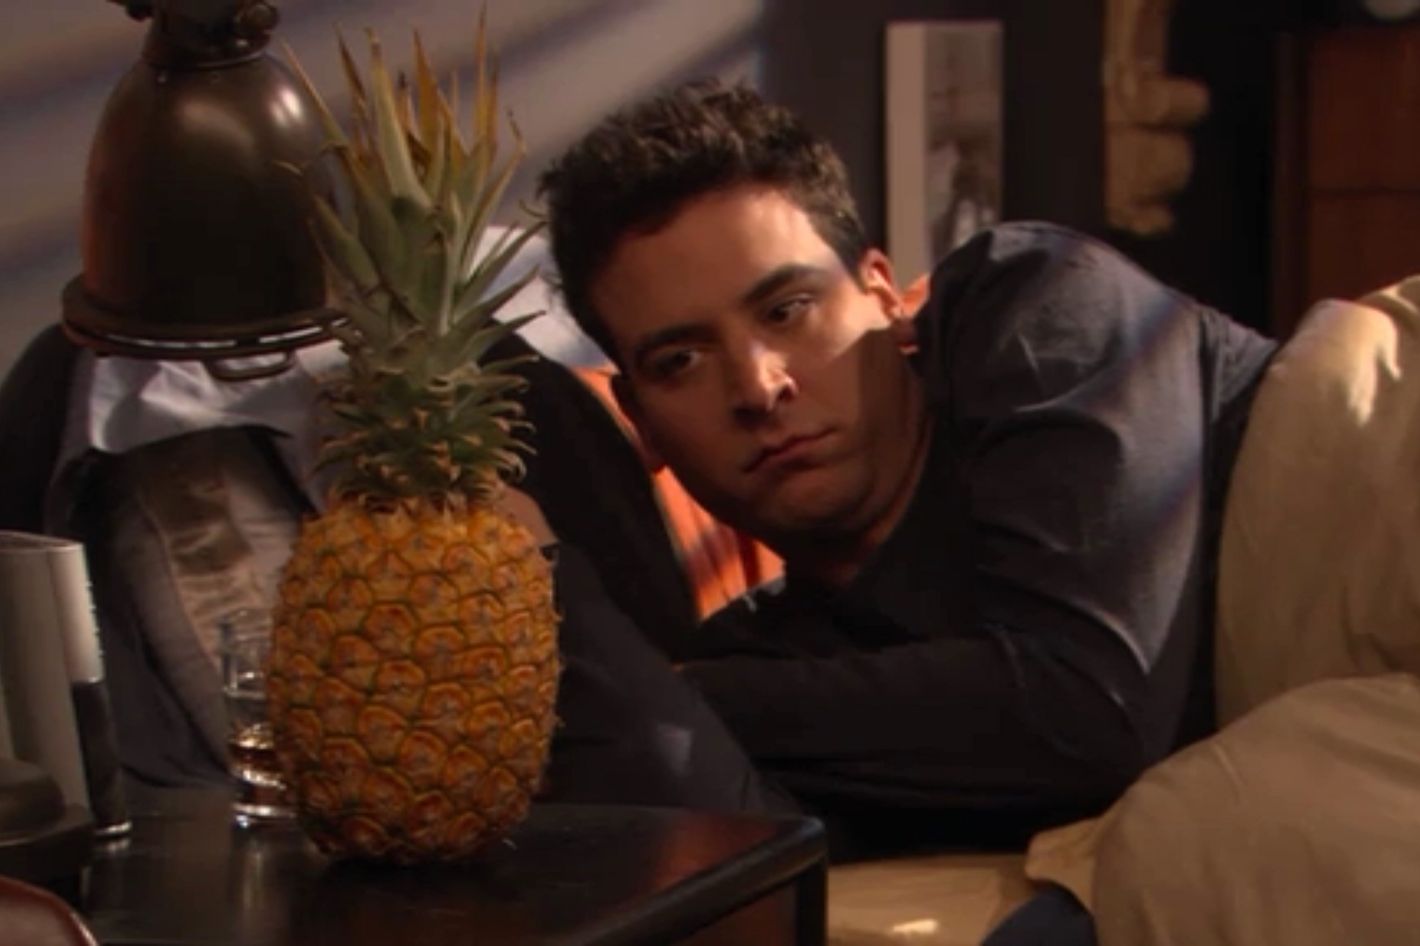 How I Met Your Mother. Season 1, Episode 10: “The Pineapple Incident." 2005-2014. CBS.